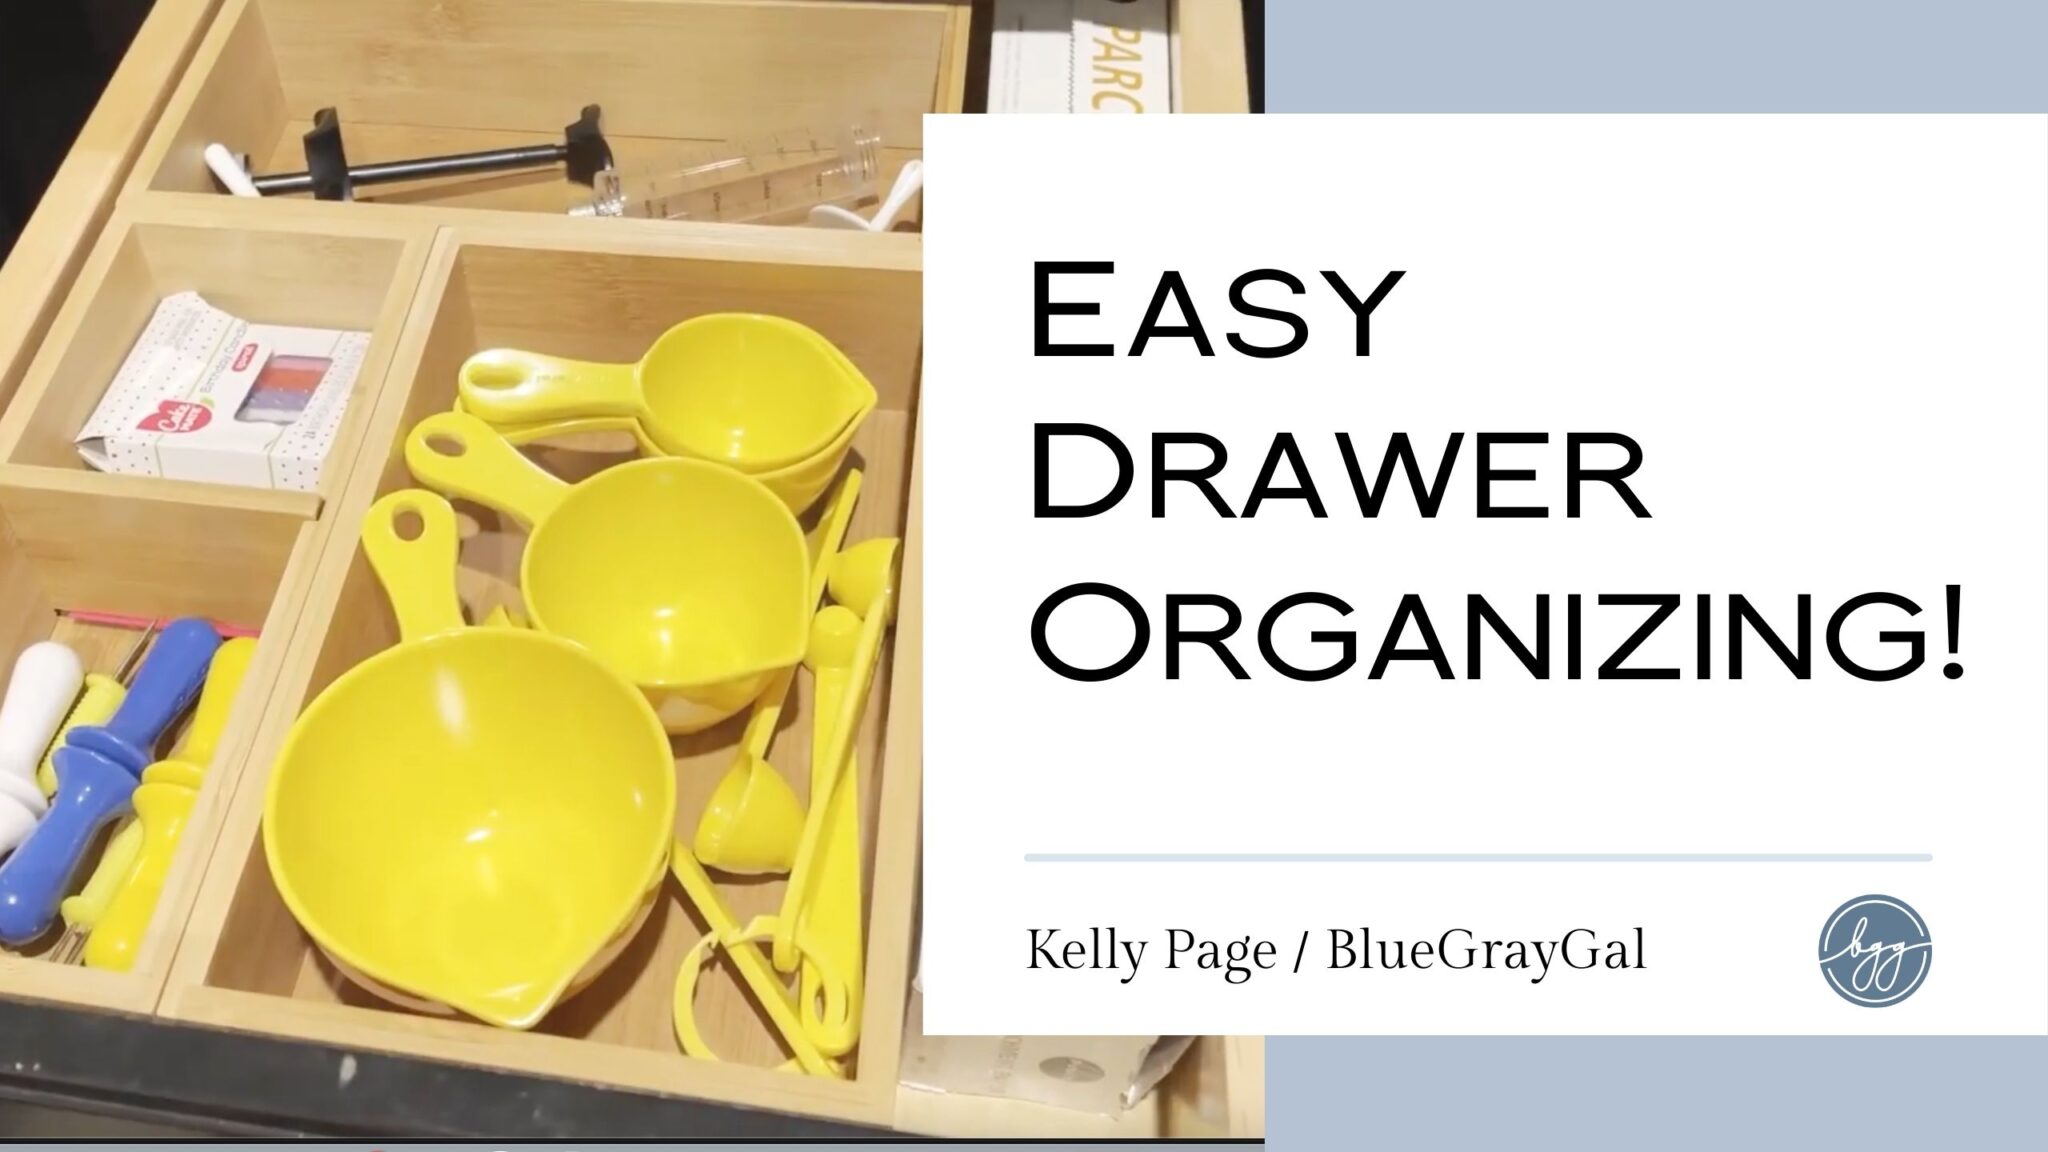 Easy drawer organizing